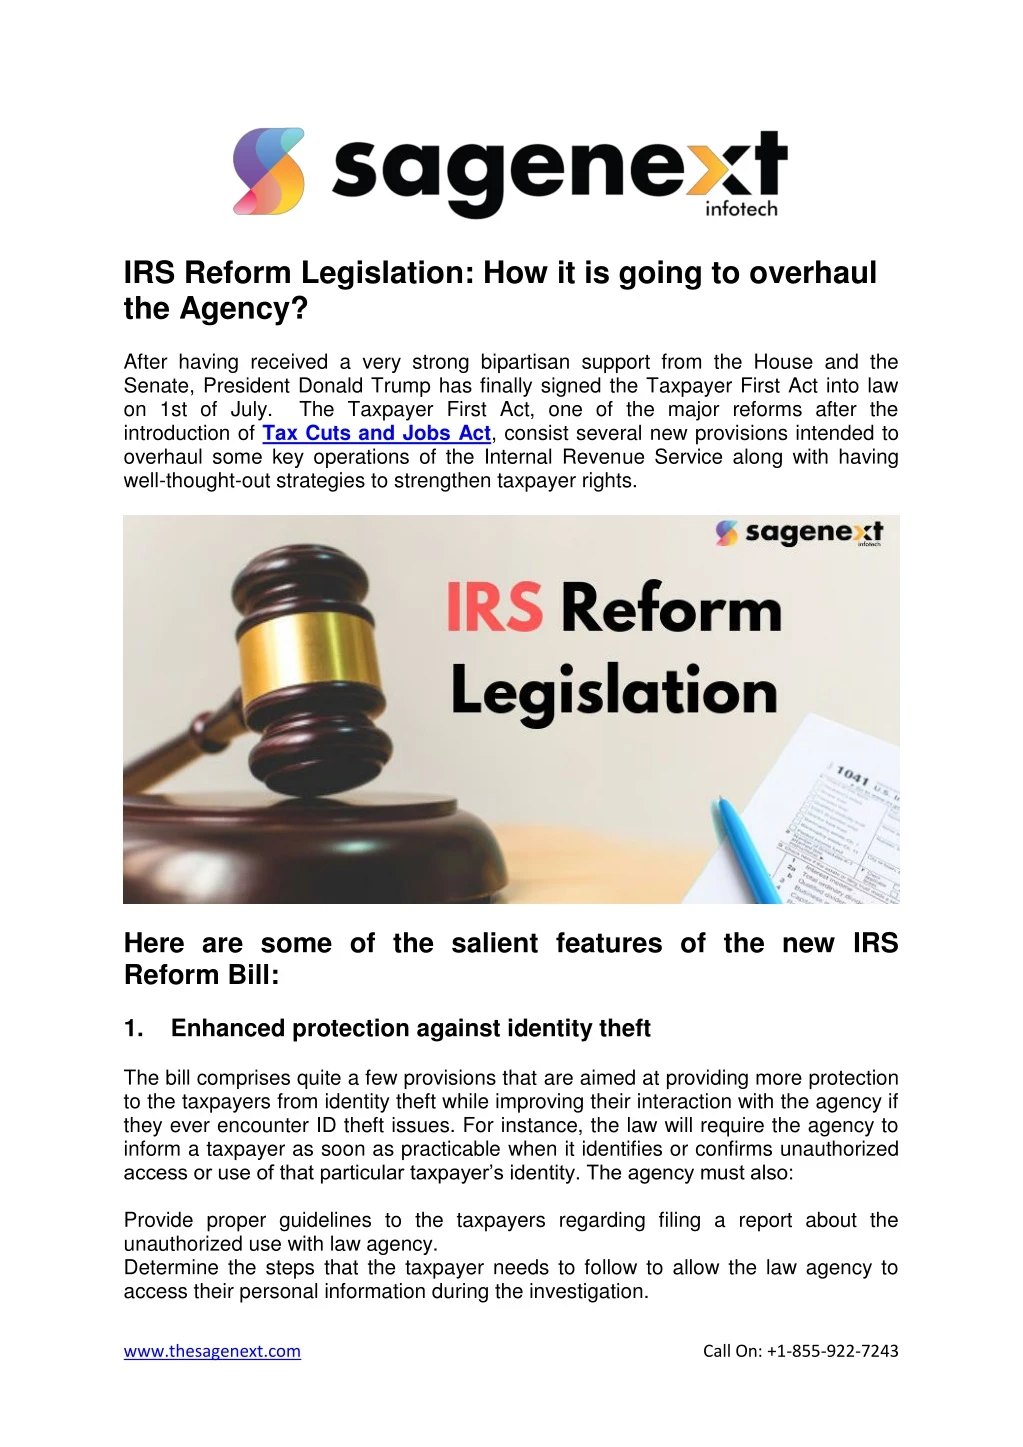 irs reform legislation how it is going